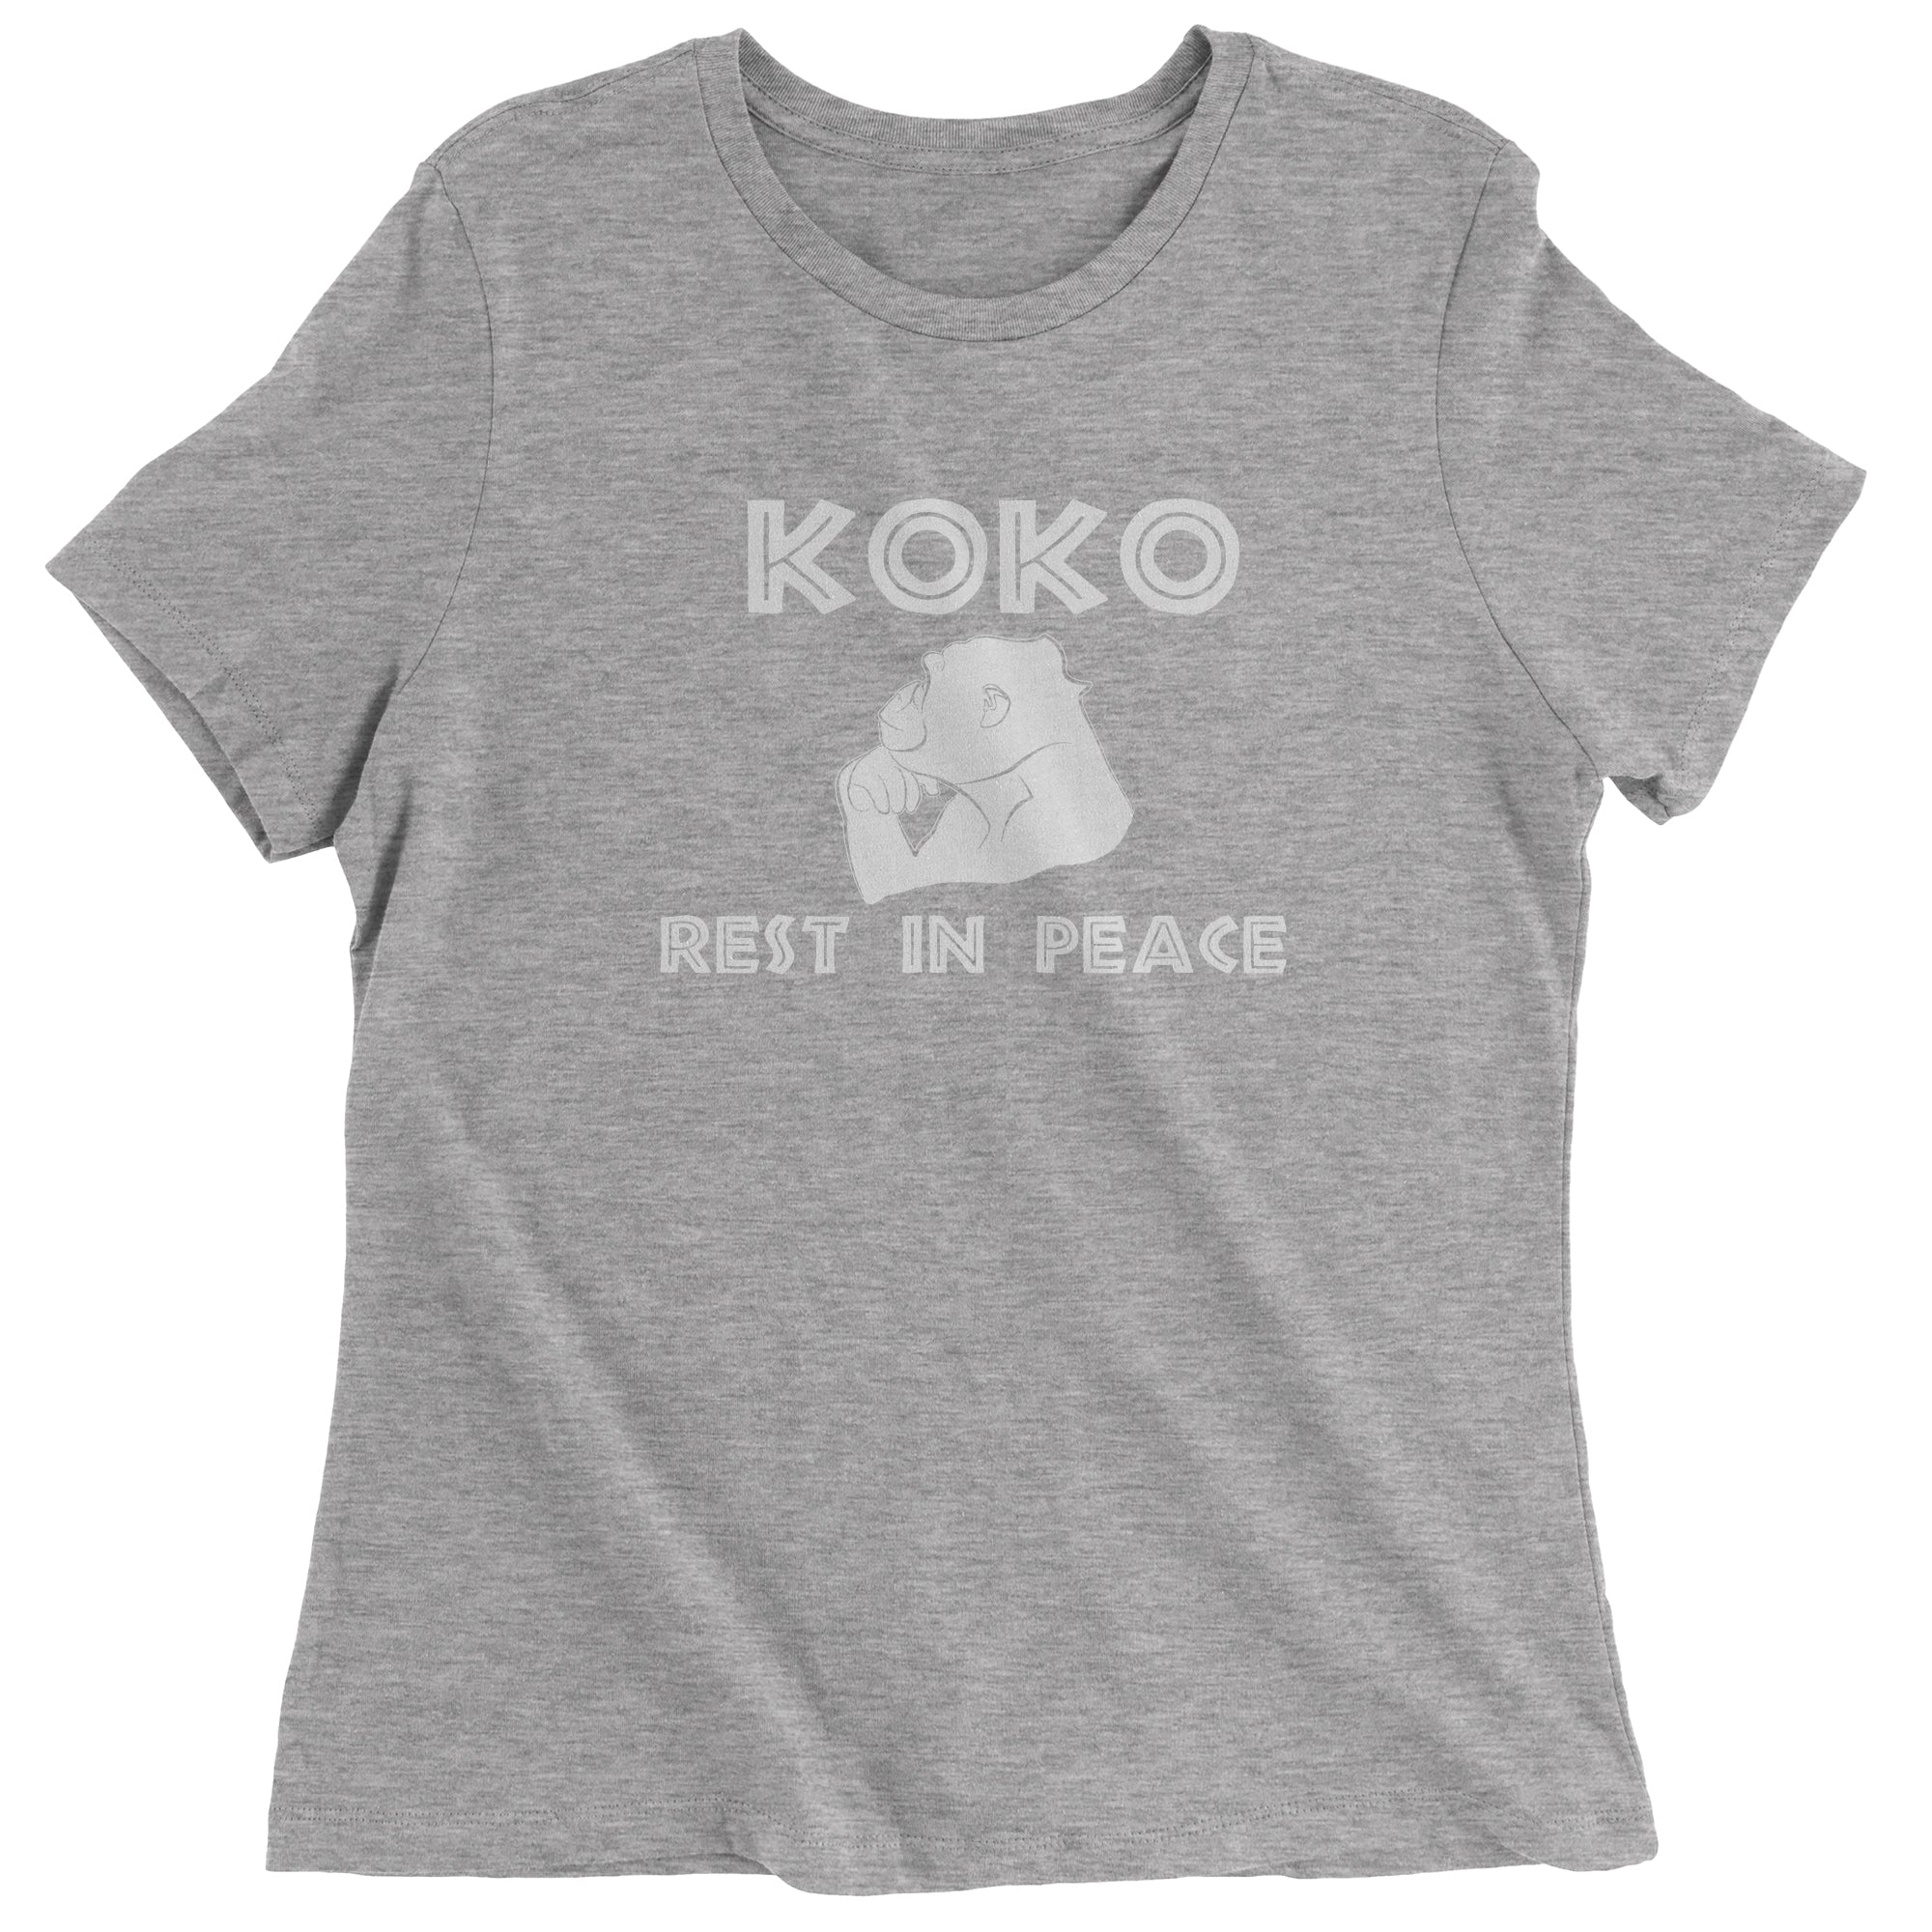 Koko the Talking Gorilla Rest in Peace Women's T-Shirt